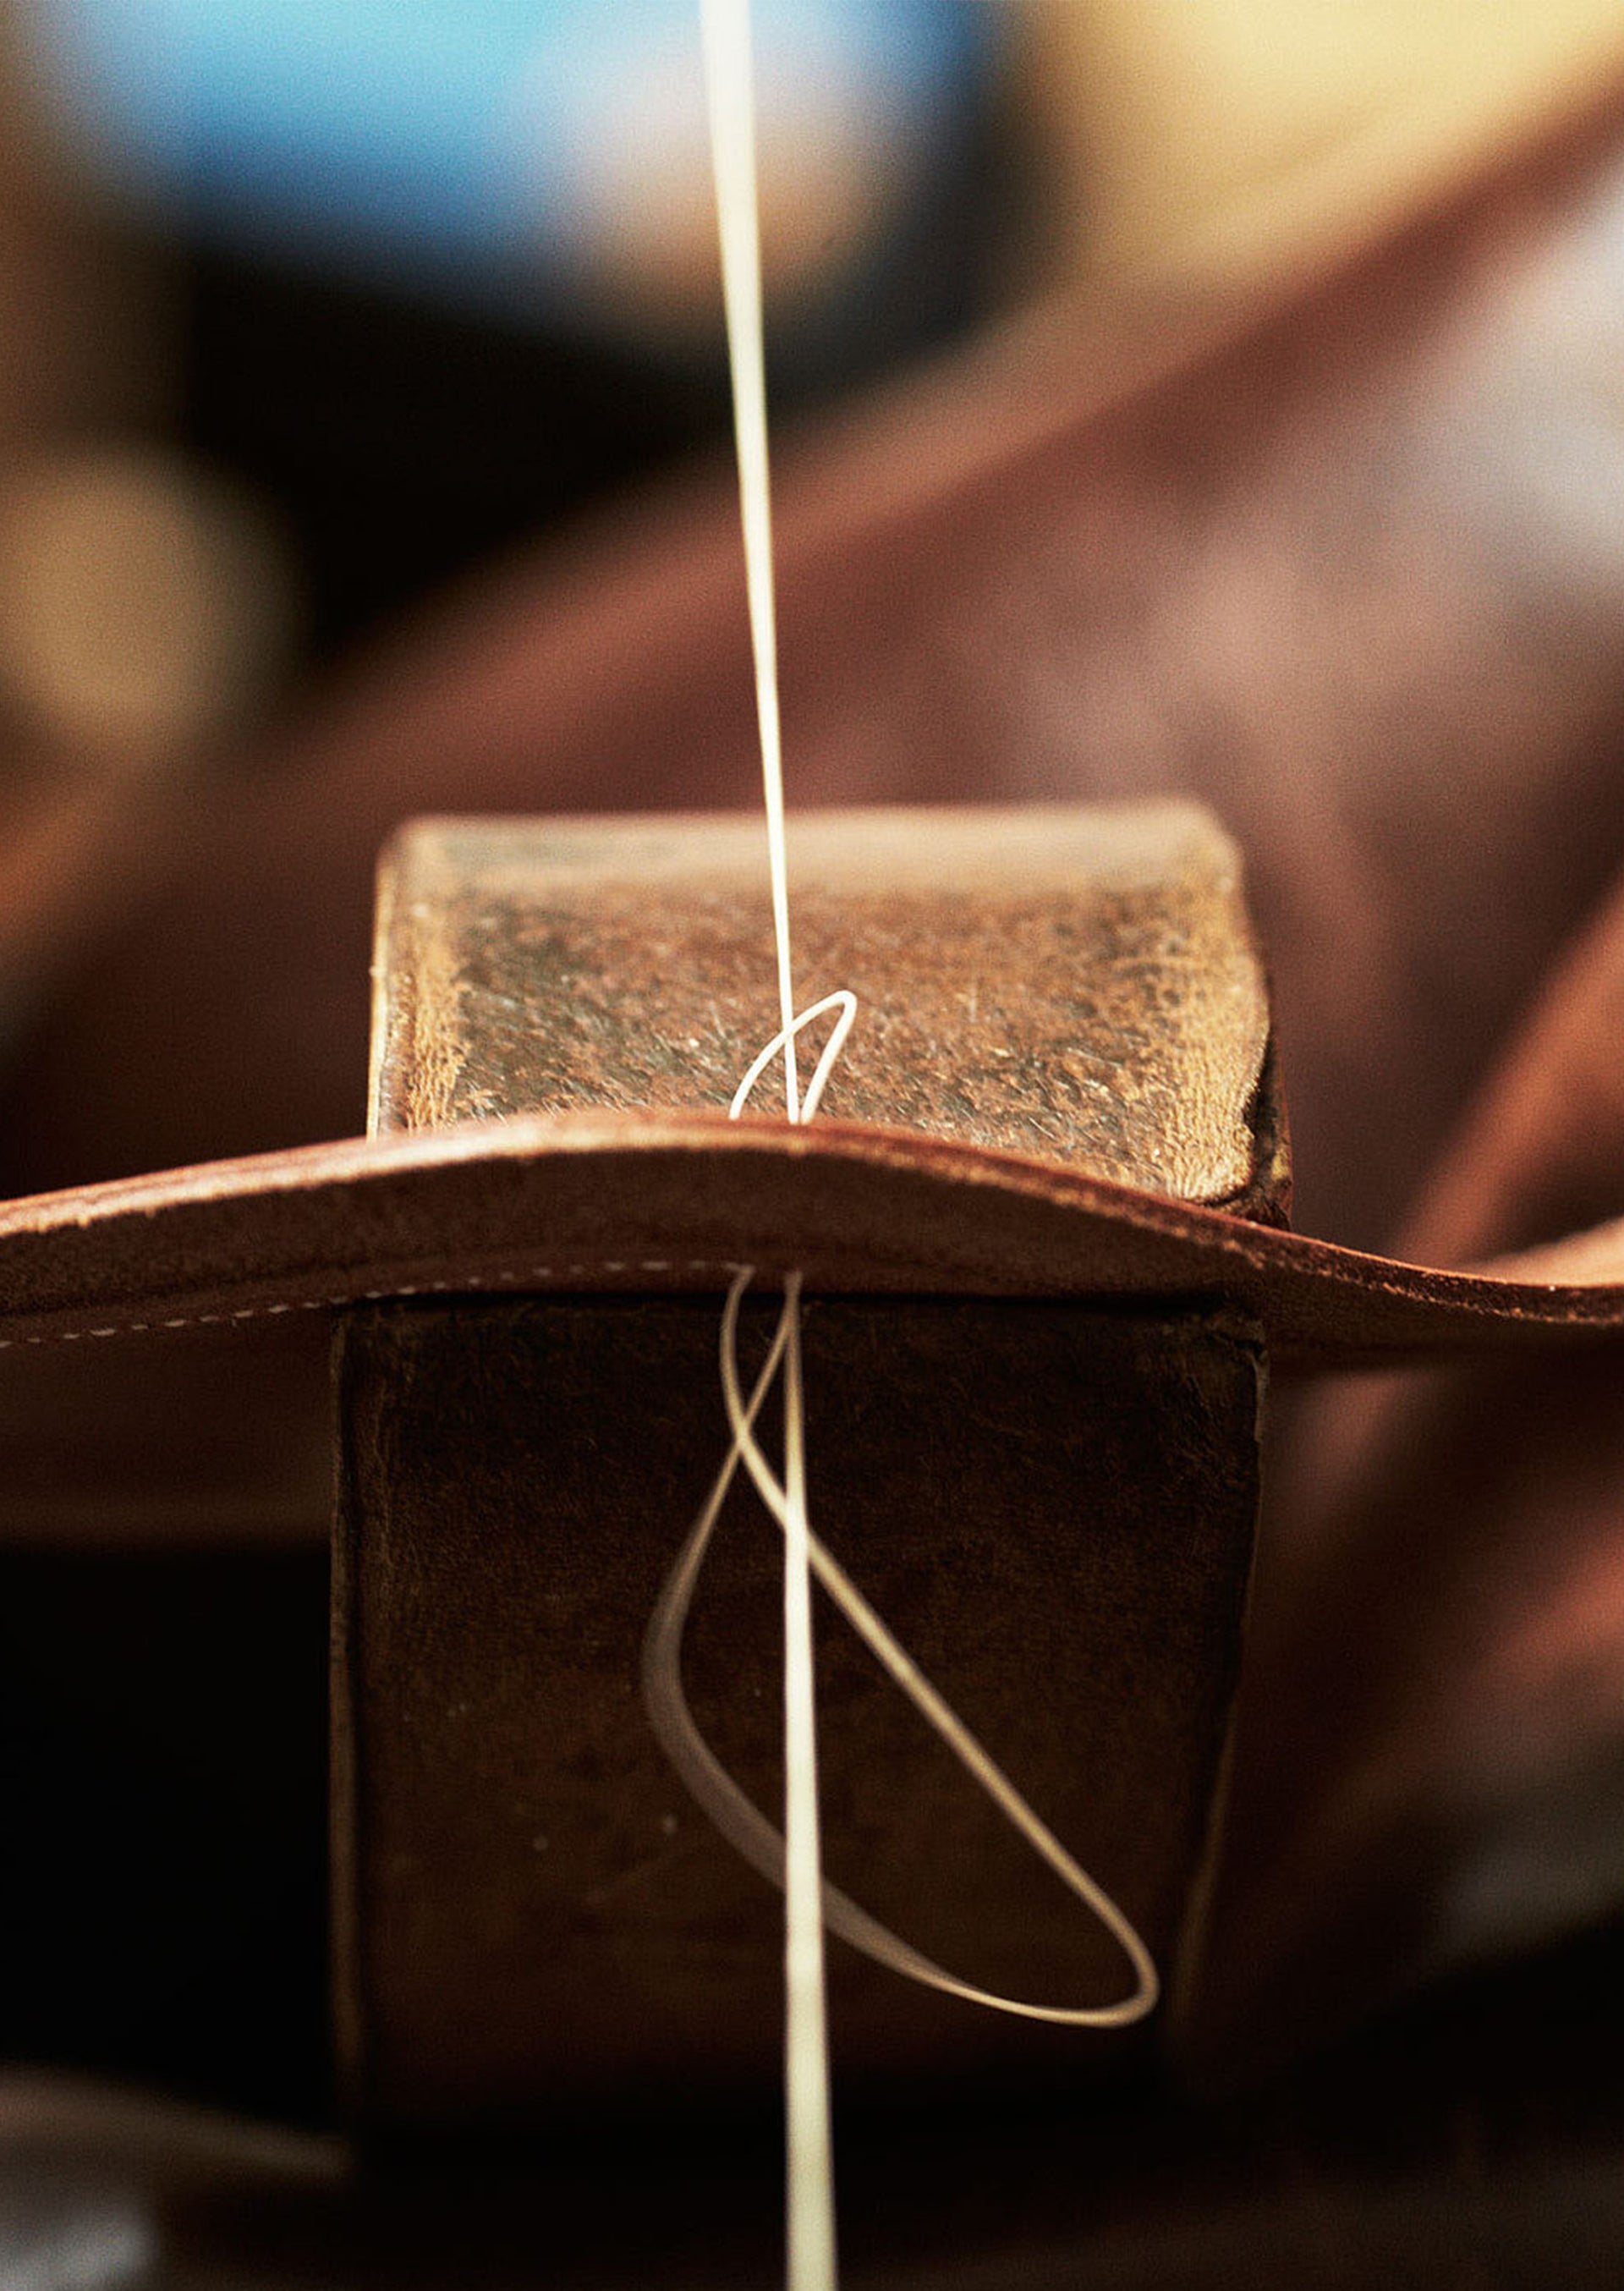 TQING™-Hemp Wax Thread | About Craft